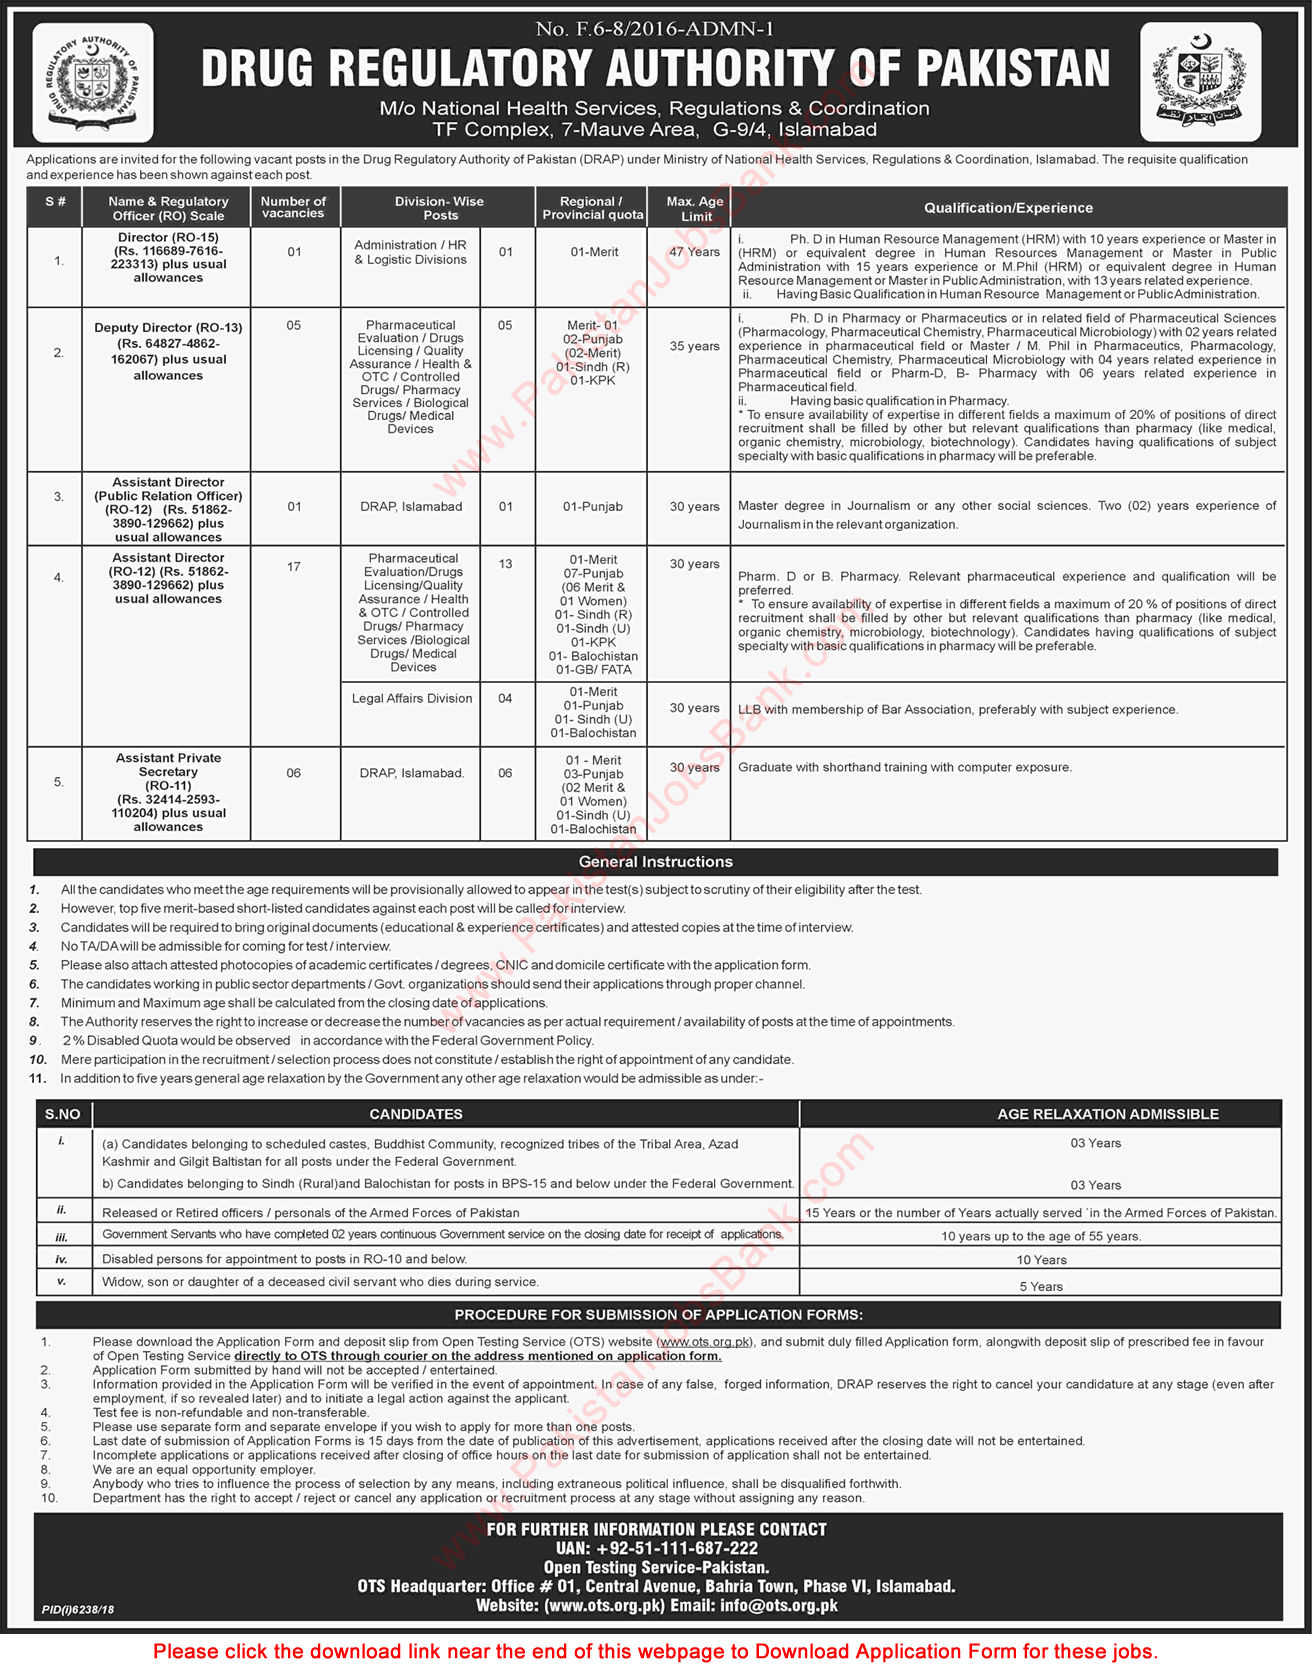 Drug Regulatory Authority of Pakistan Jobs 2019 June / July OTS Application Form Download Latest